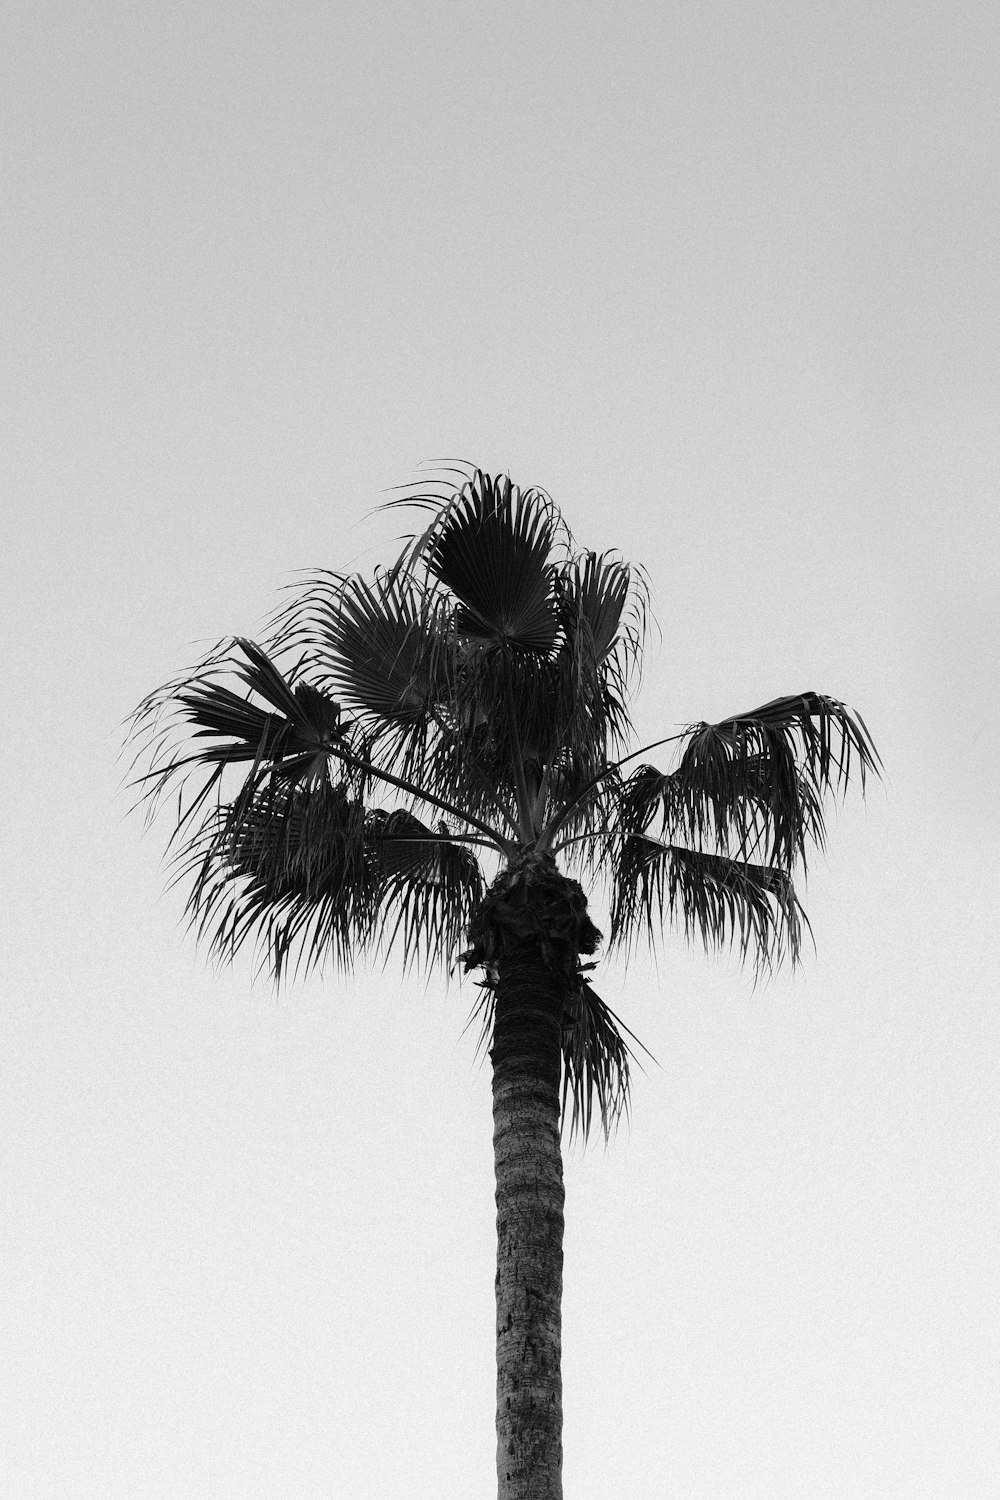 green palm tree under gray sky